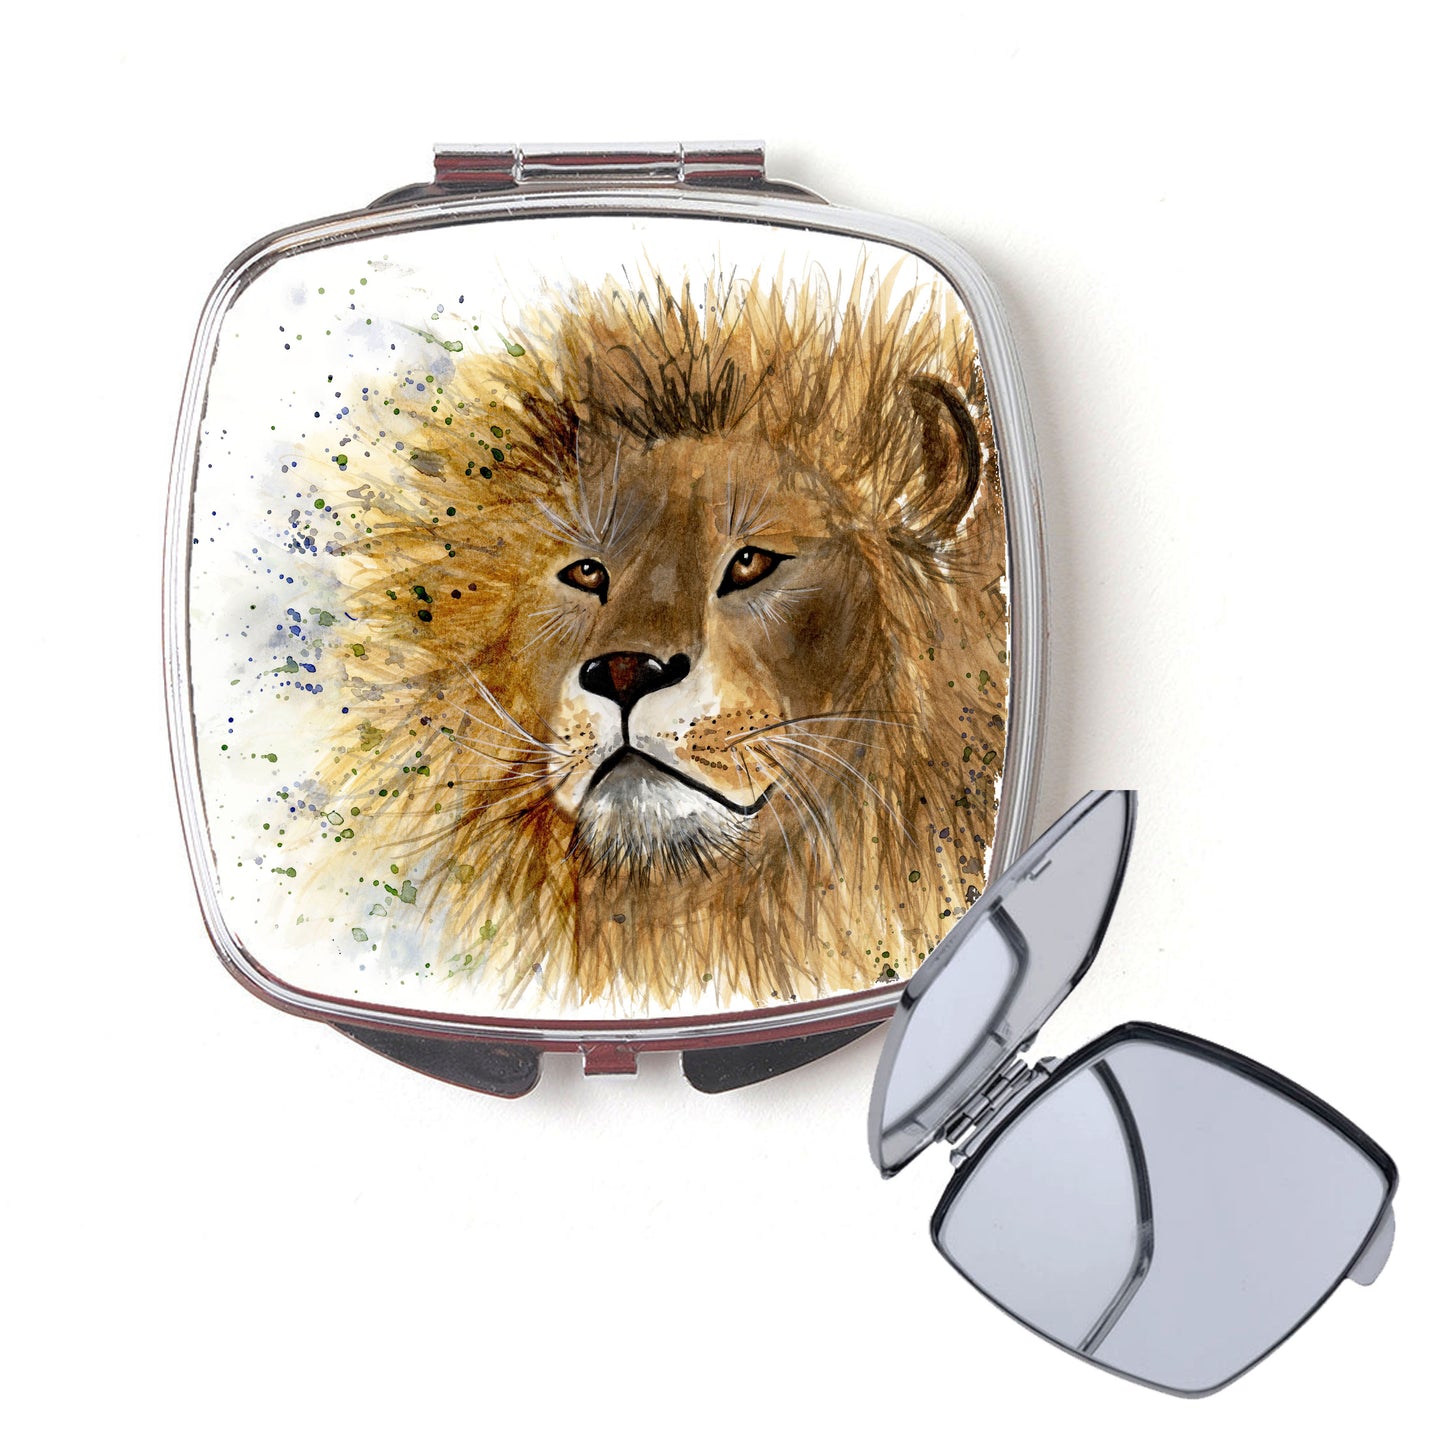 Lion compact mirror